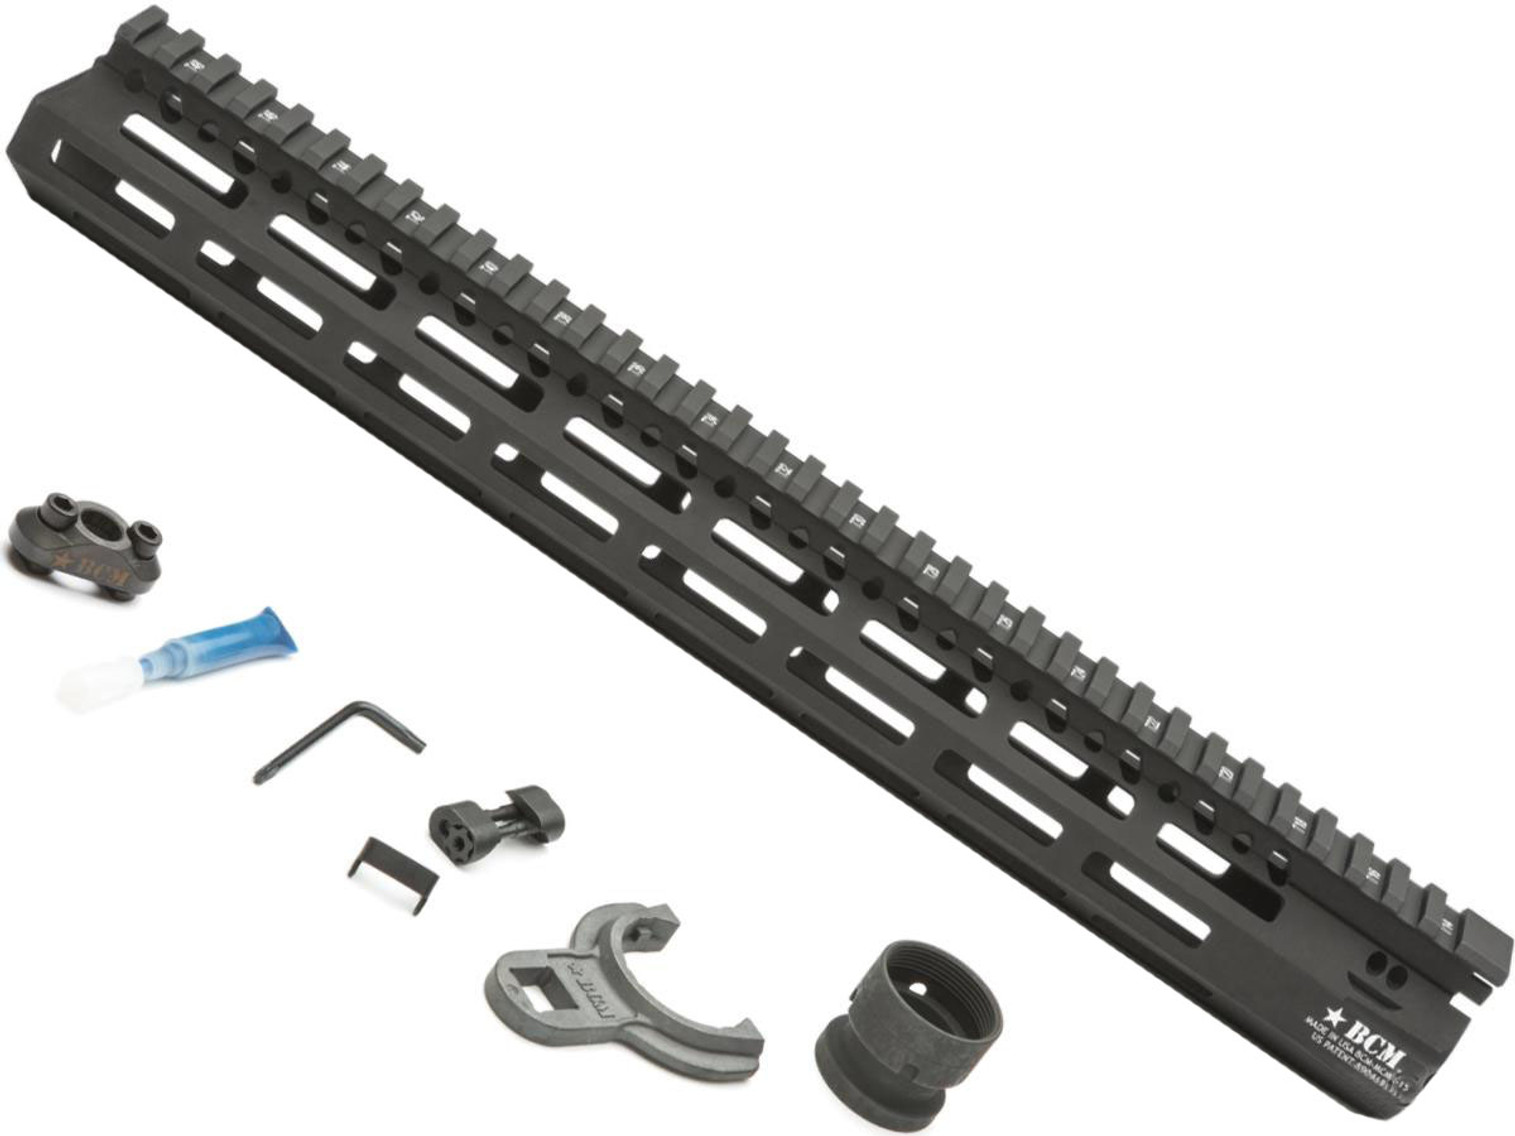 BCM GUNFIGHTER MCMR M-LOK Compatible Modular Rail for AR15 Rifles (Length: 15")